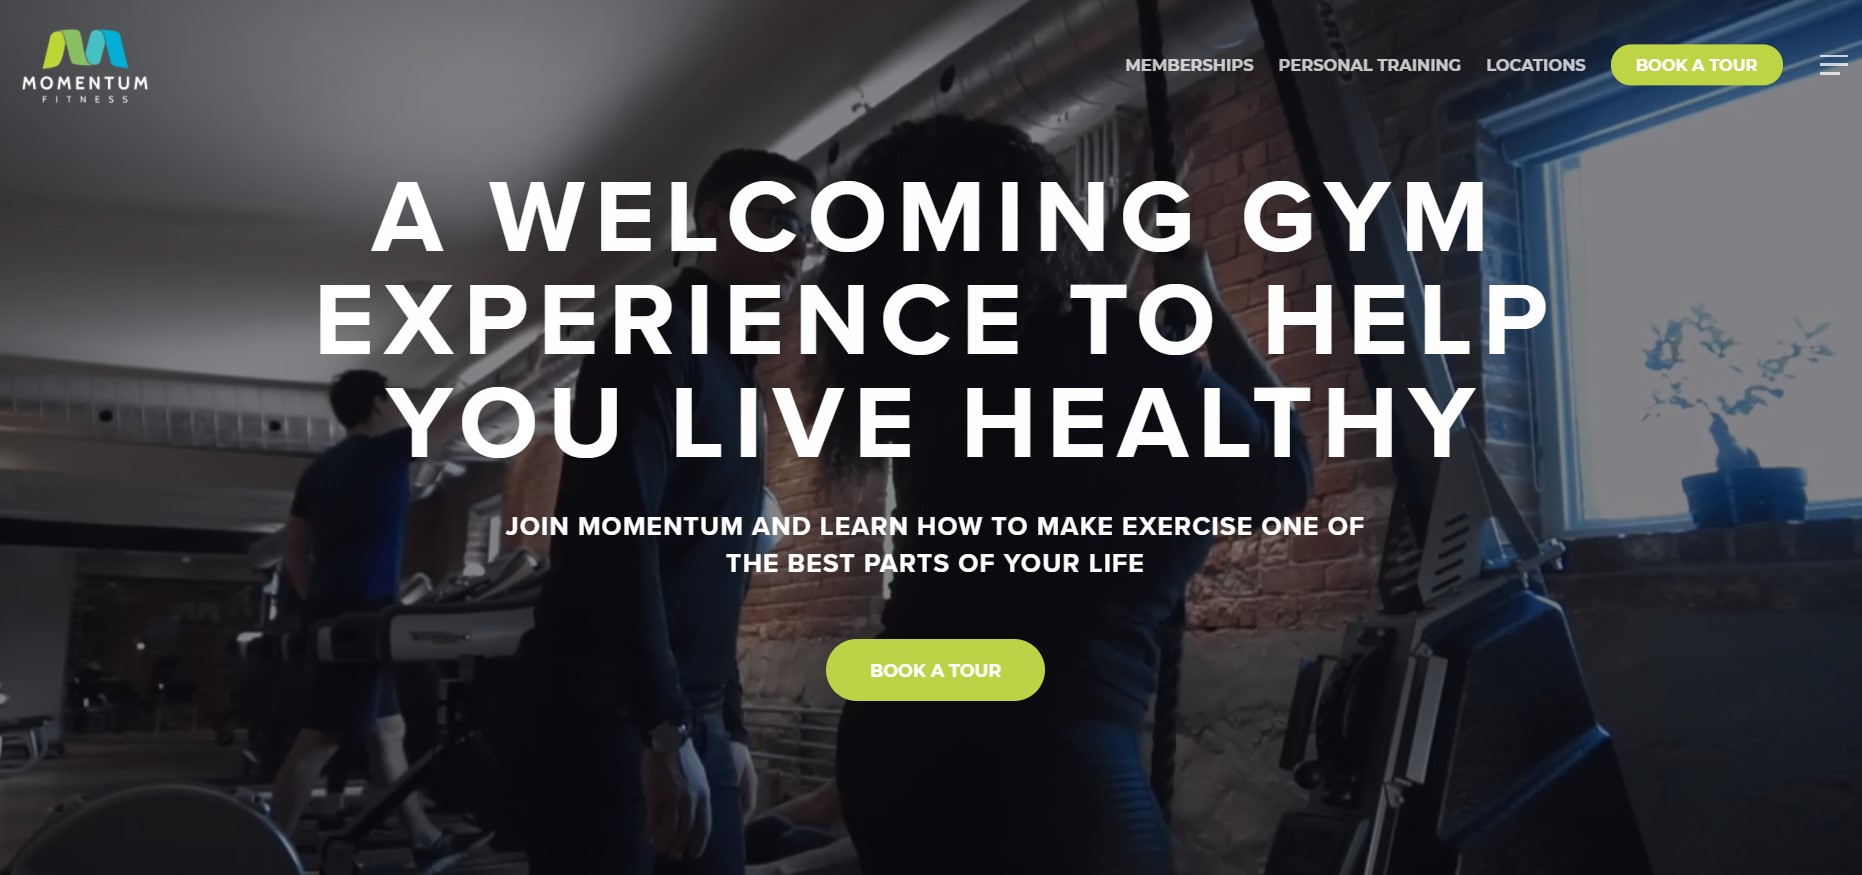 momentum fitness gym in hamilton